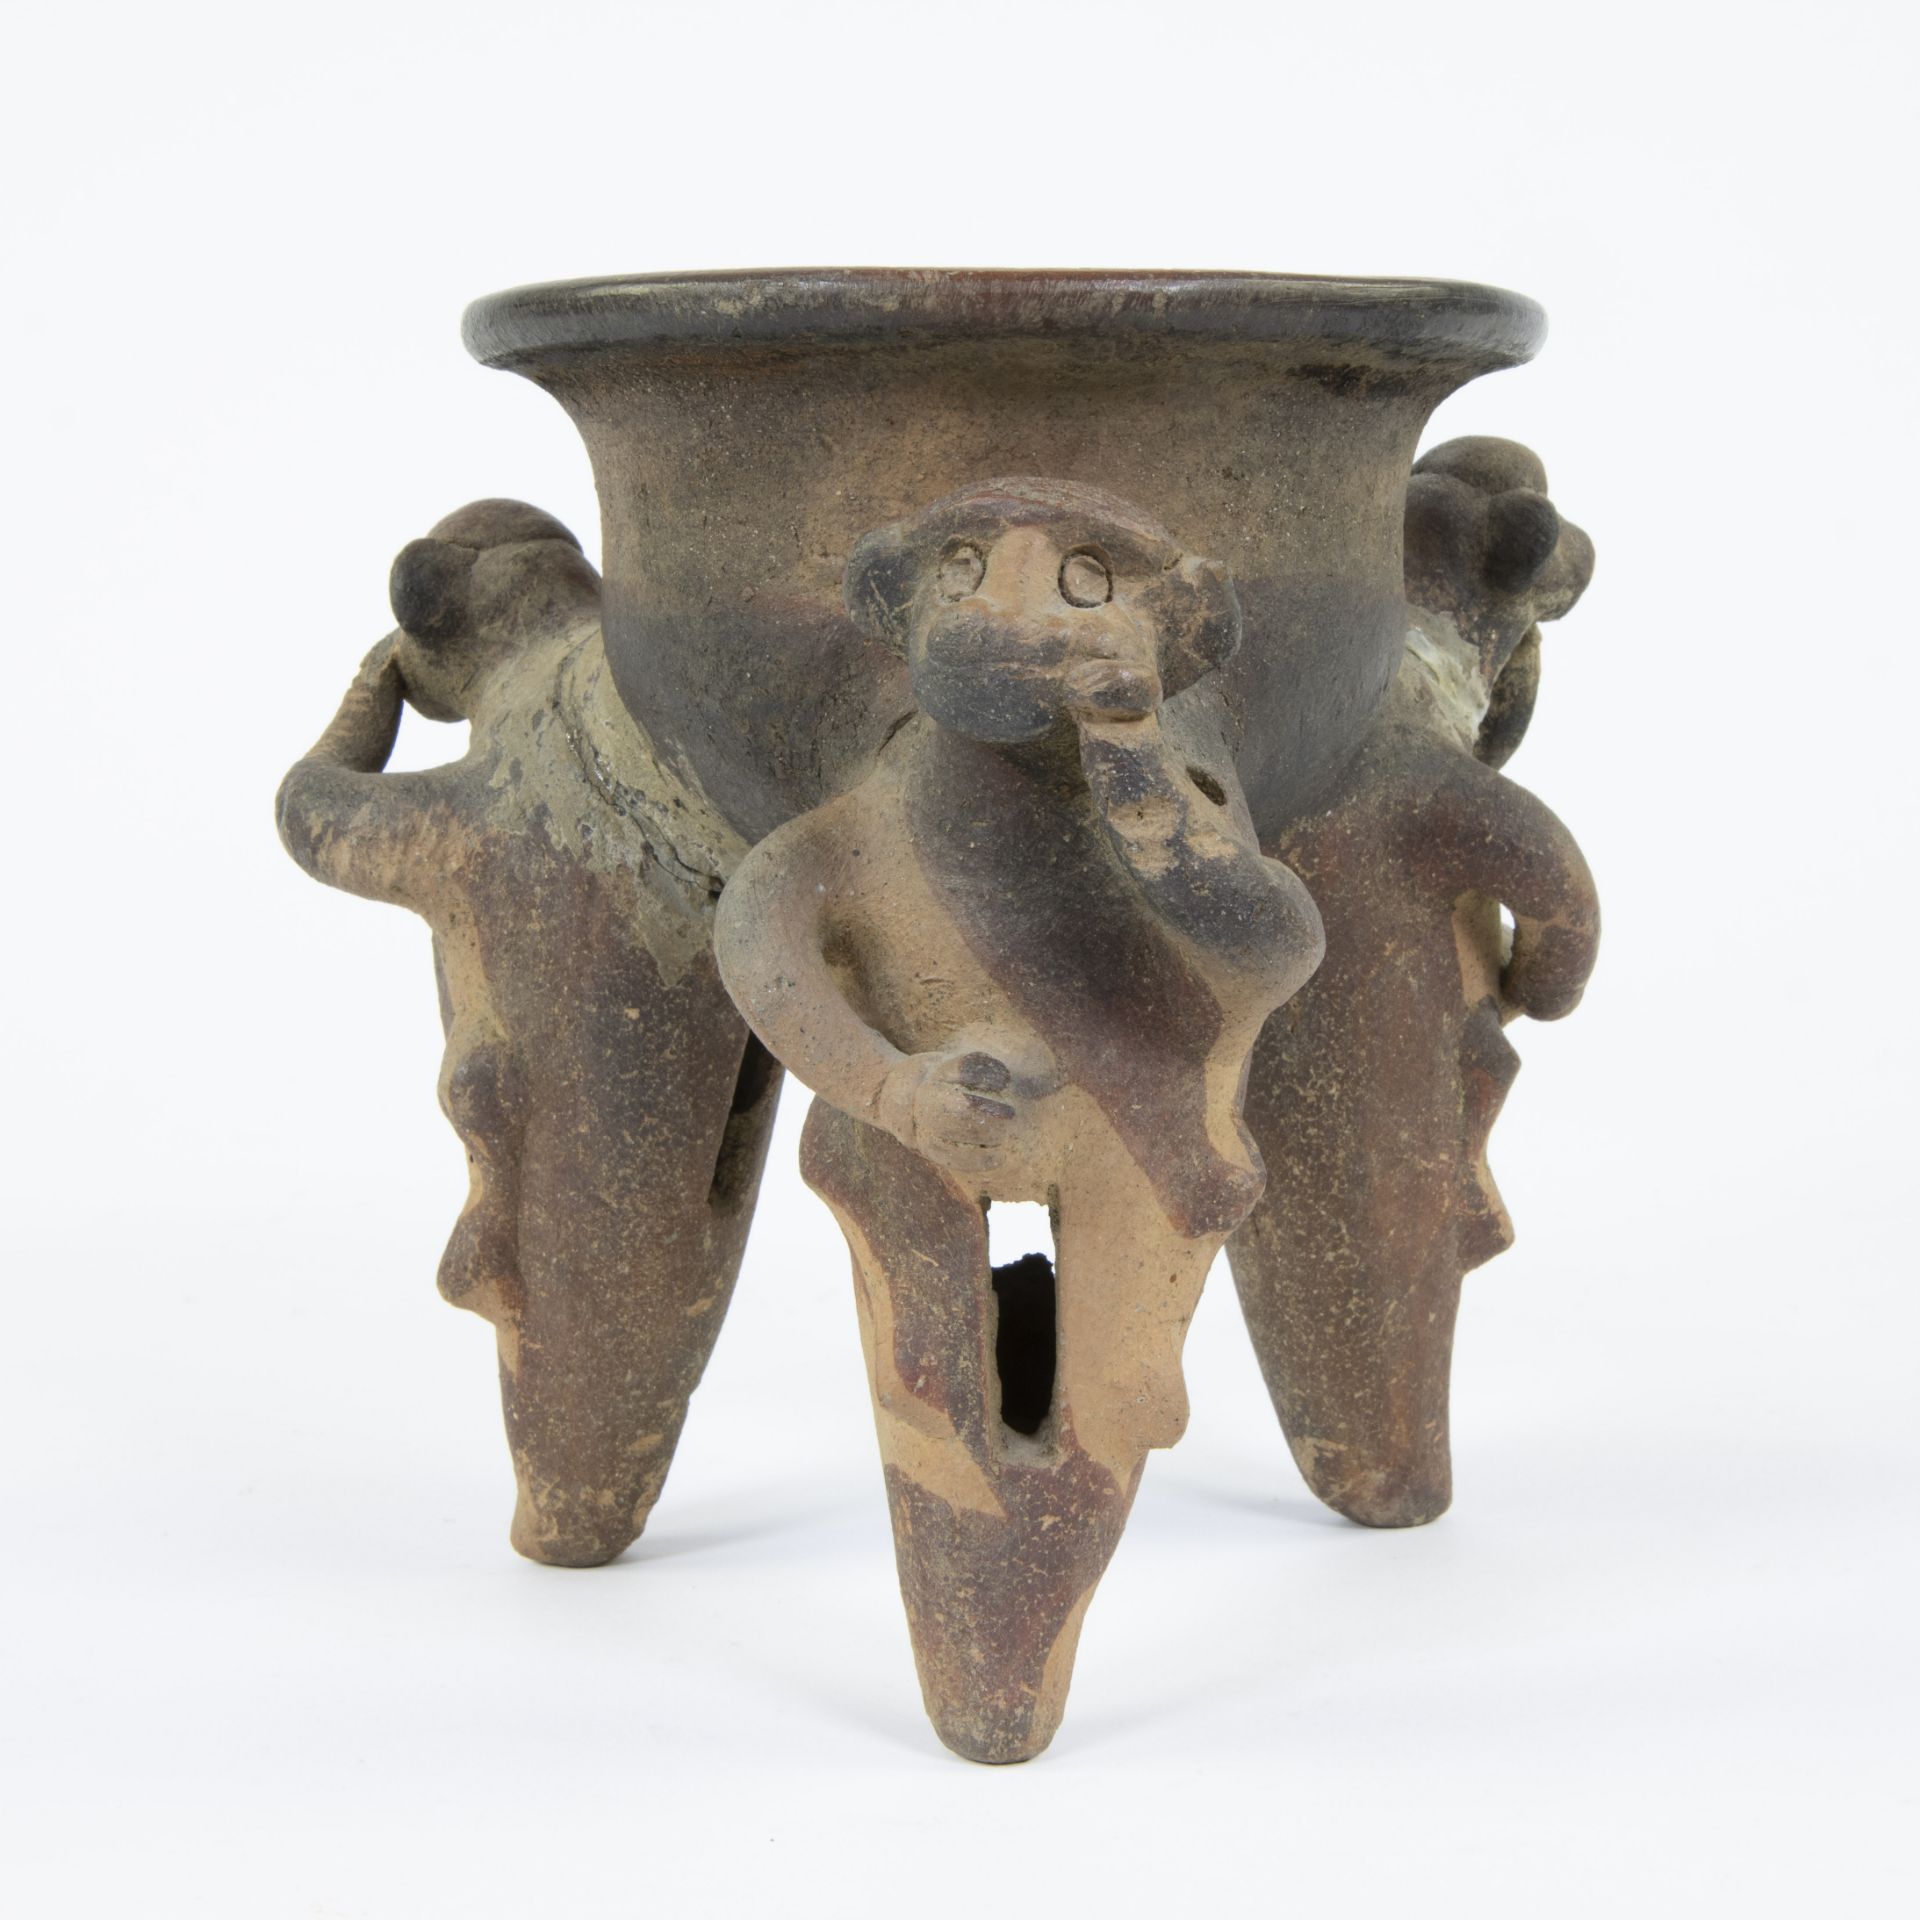 Ancient Pre Columbian Costa Rica earthenware tripot vessel - Image 4 of 5